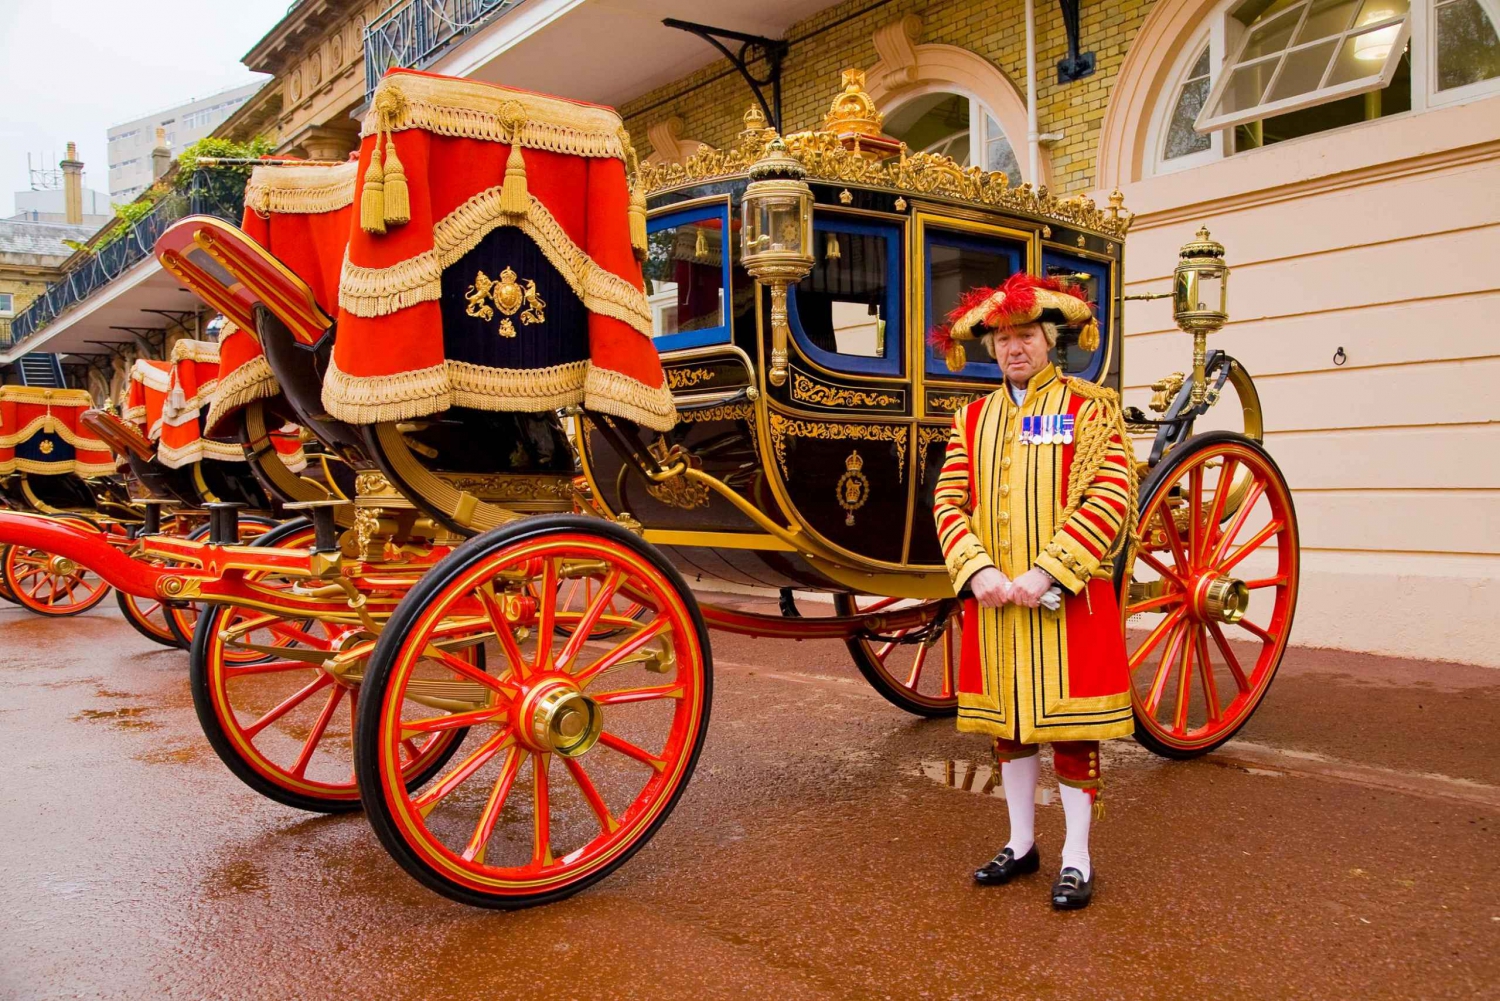 Buckingham Palace: The Royal Mews Entrance Ticket